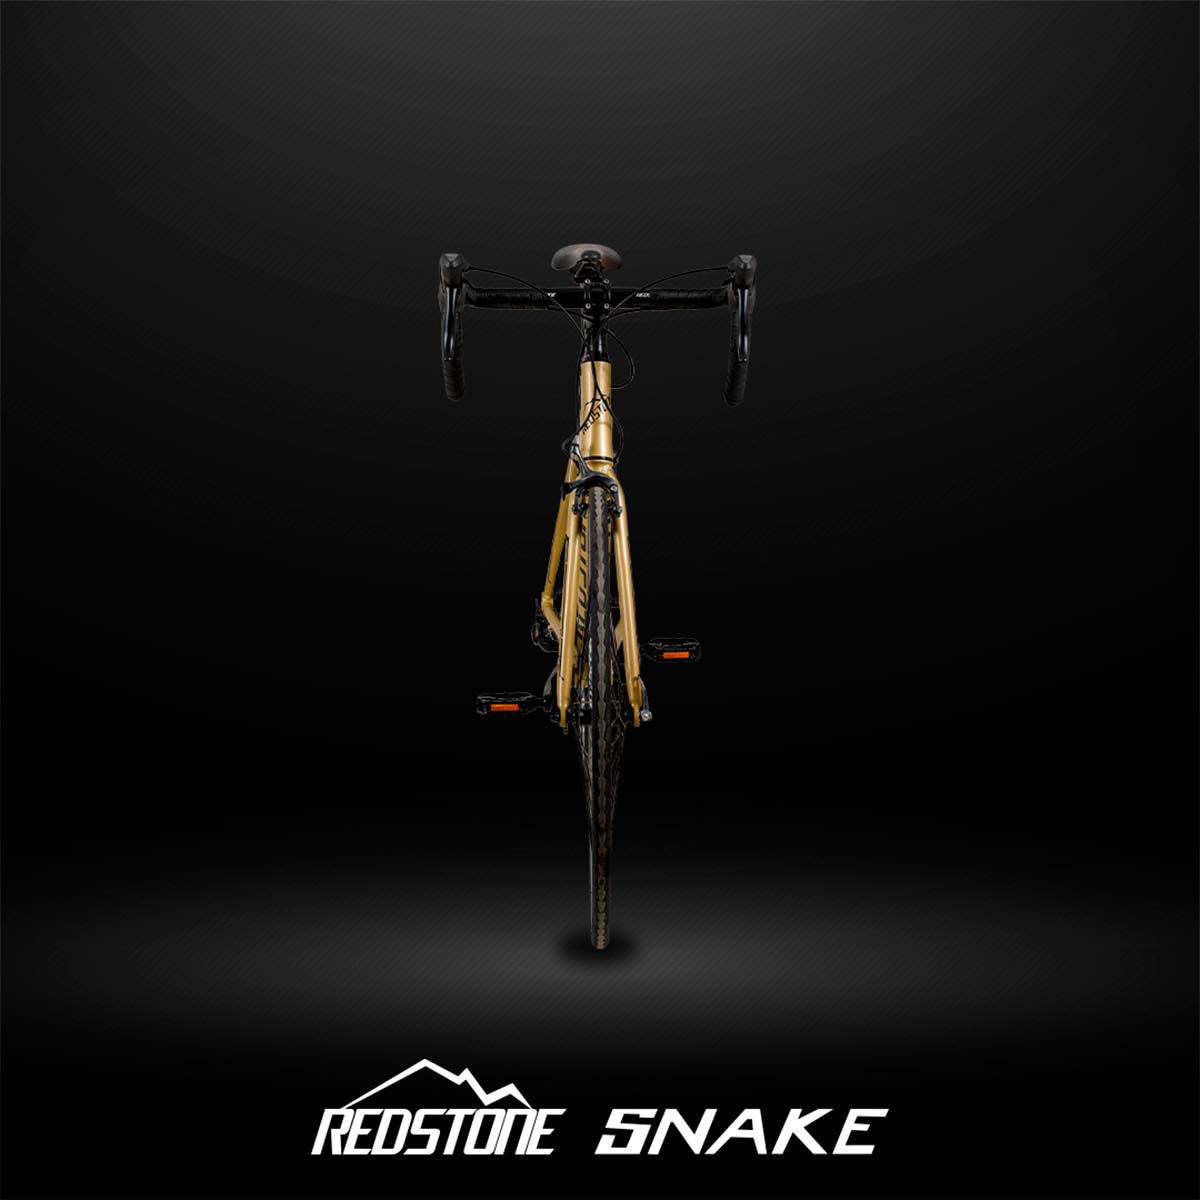 Bicicleta Redstone Snake Speed Aro 700 Shimano Tourney 14V Dourada